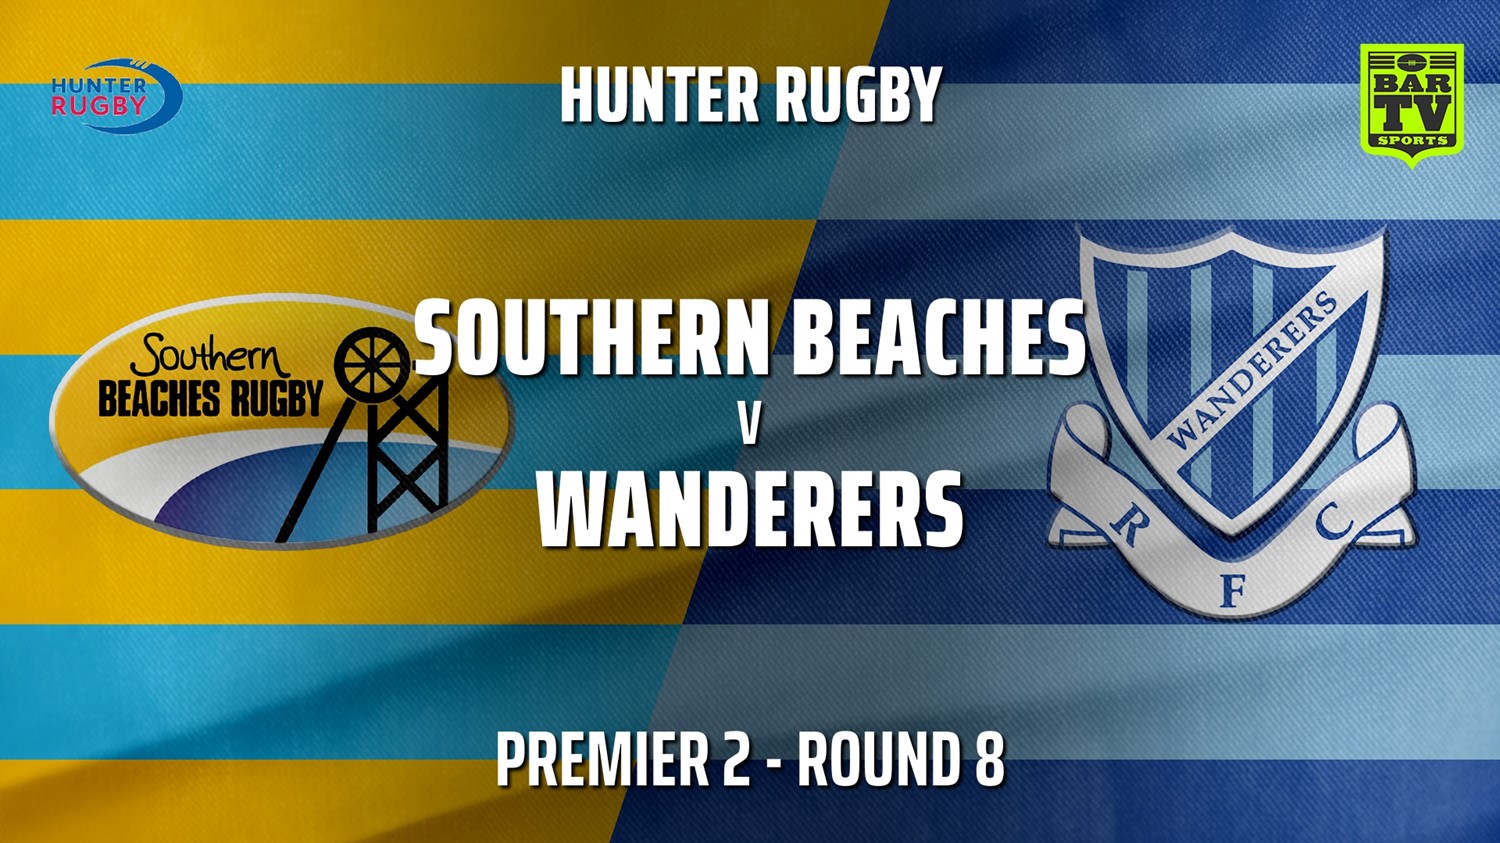 210605-HRU Round 8 - Premier 2 - Southern Beaches v Wanderers Slate Image